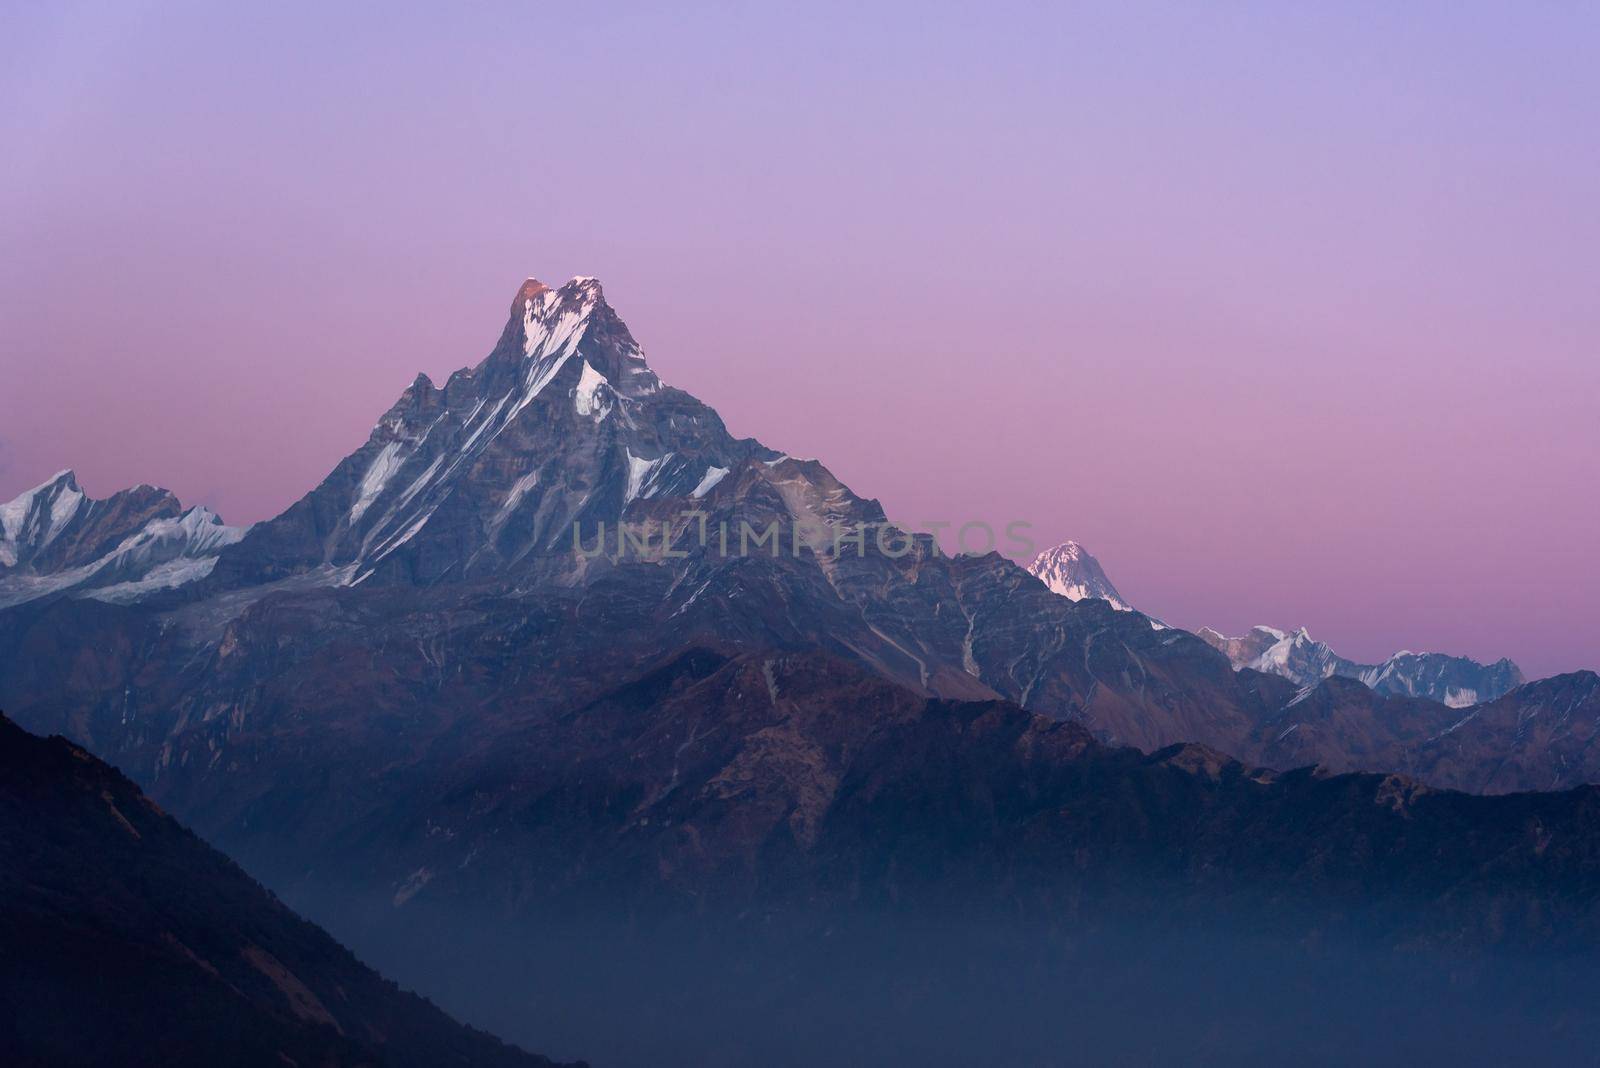 Fishtail peak or Machapuchare mountain  during sunset enviroment at Nepal.